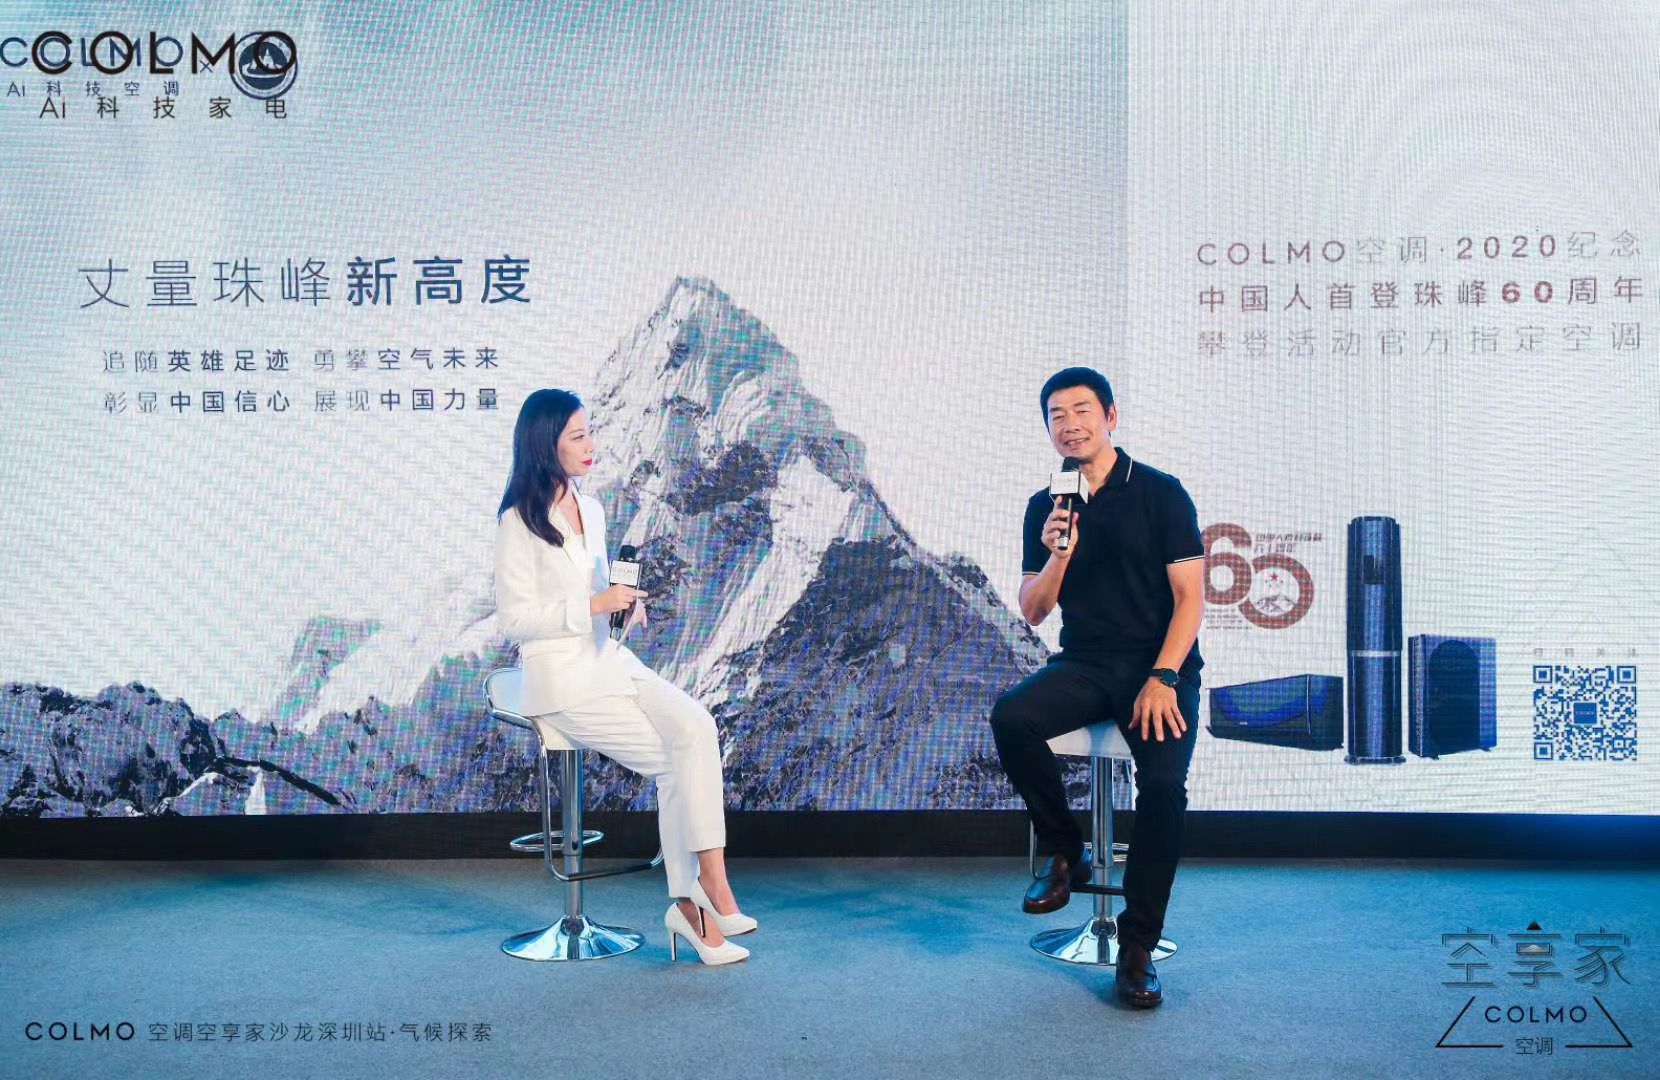 COLMO空调携手“中国登山第一人”张梁勇攀空气未来新高峰 